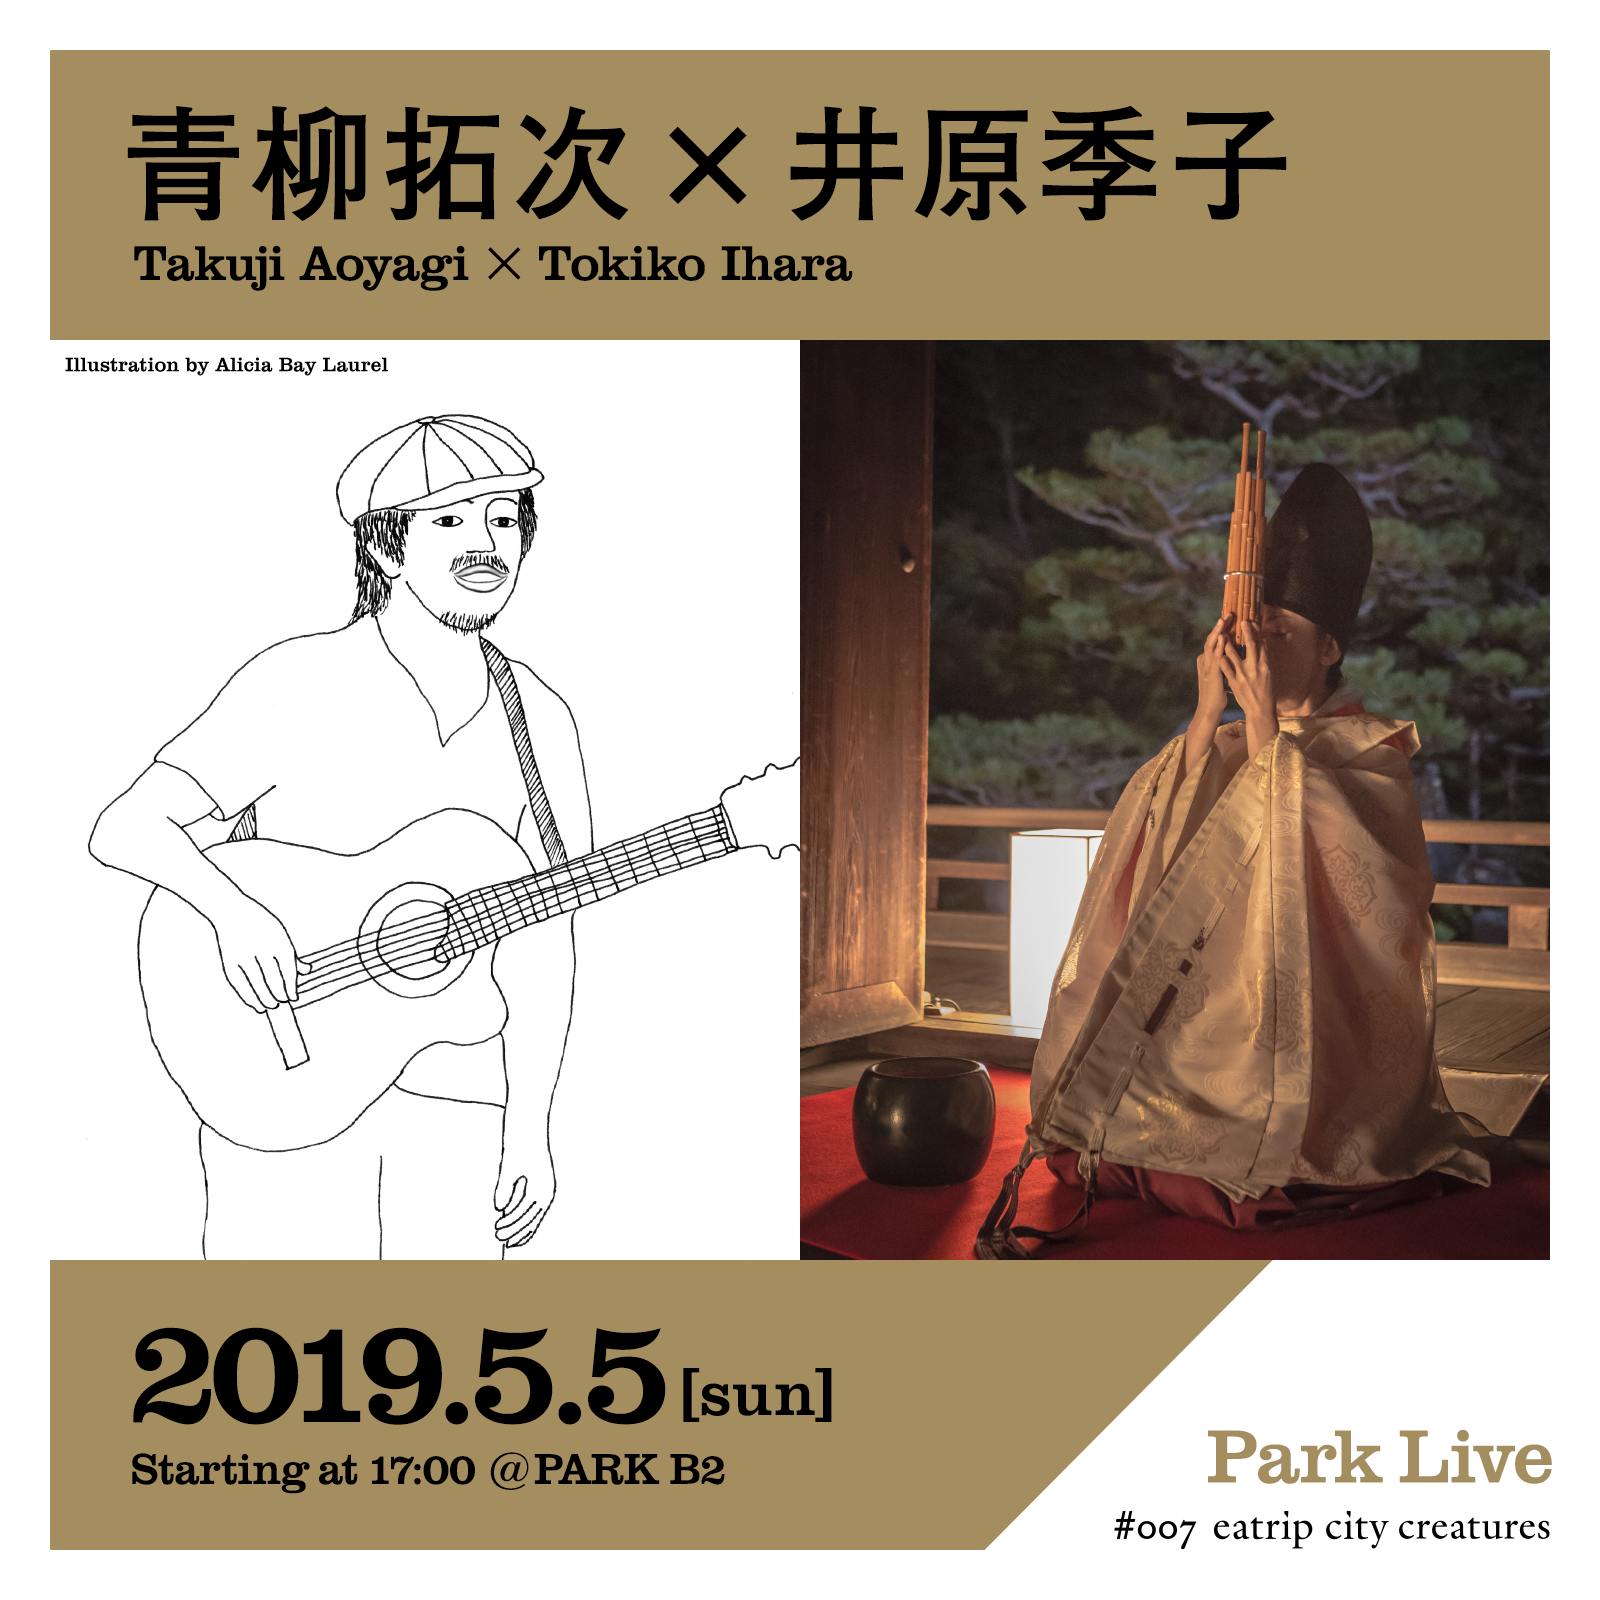 Takuji Aoyagi × Tokiko Ihara